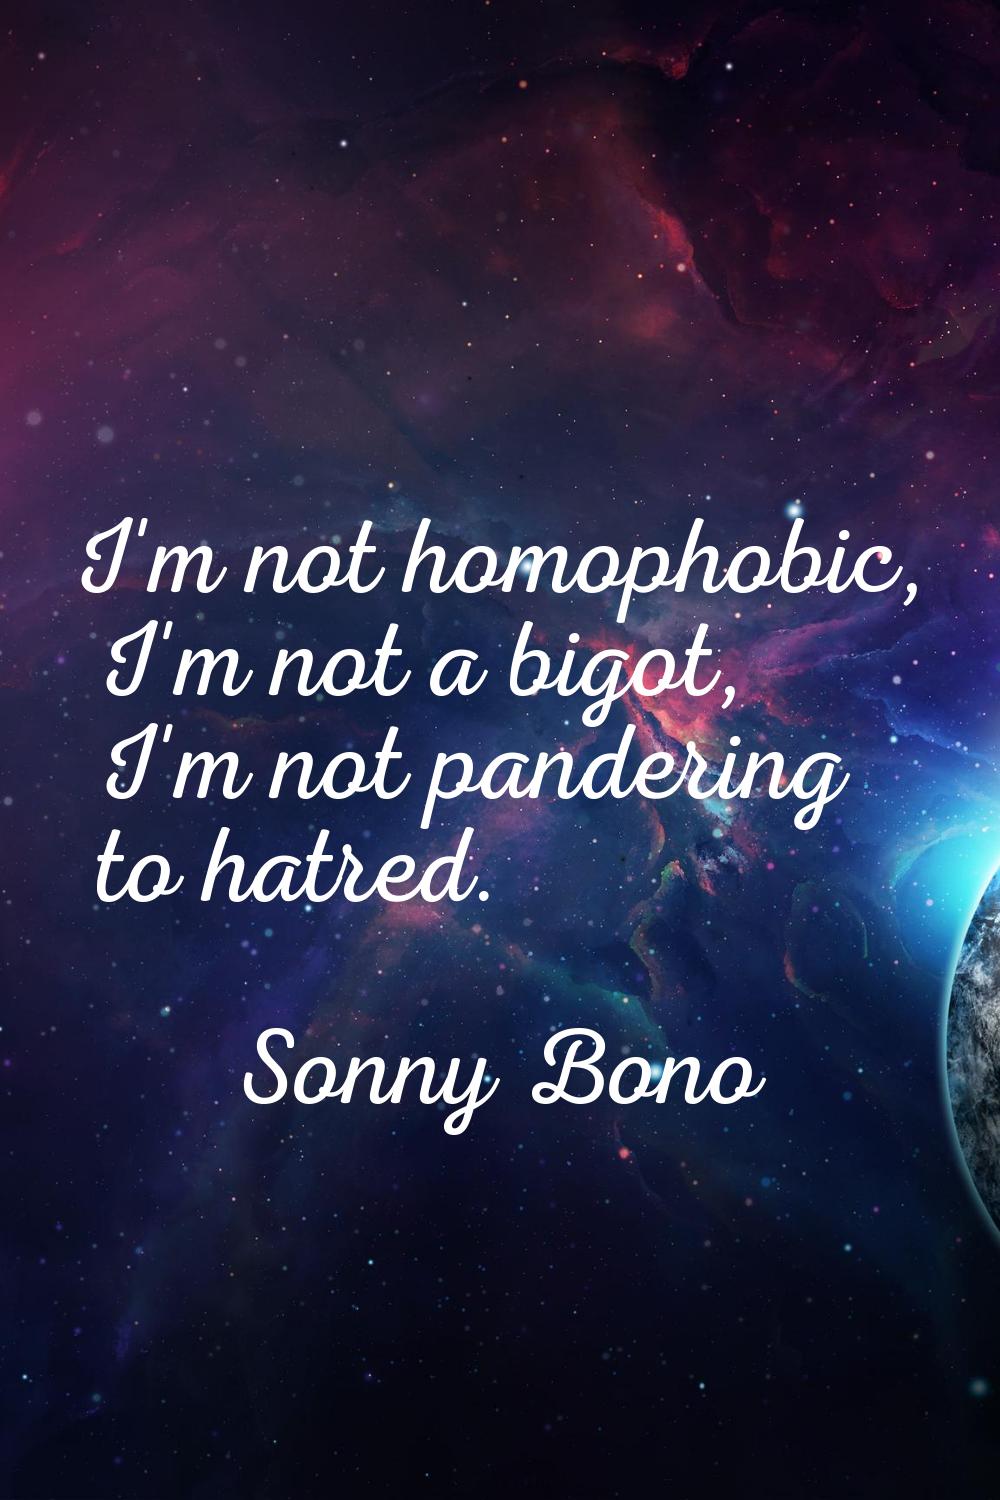 I'm not homophobic, I'm not a bigot, I'm not pandering to hatred.